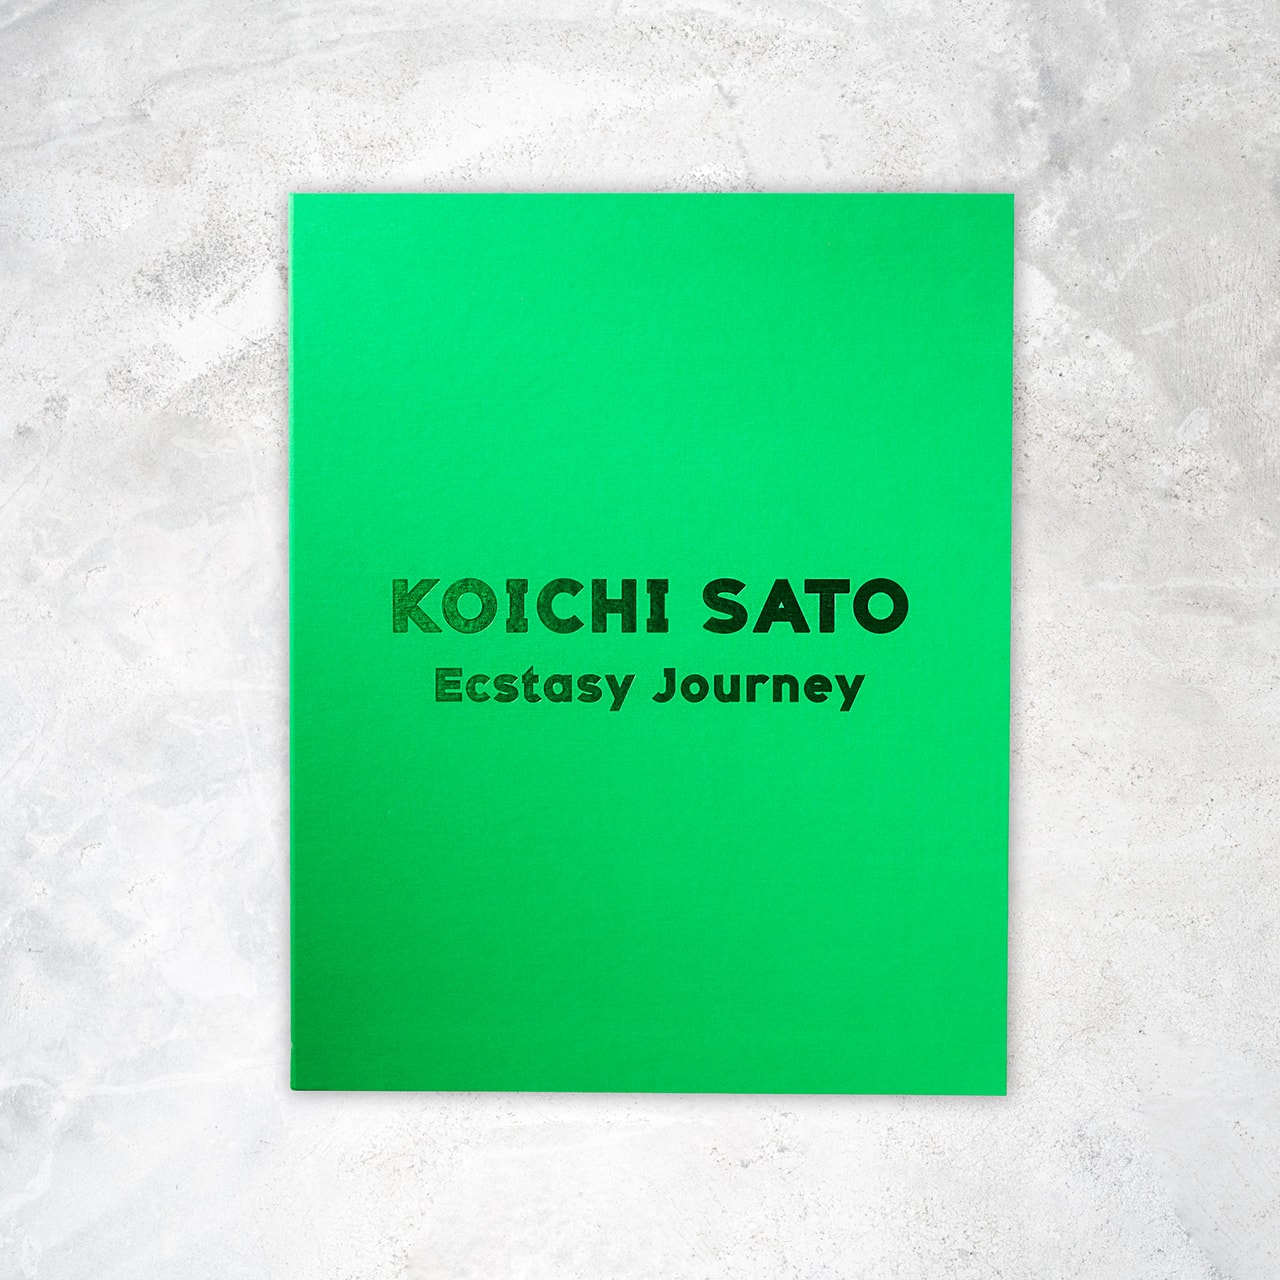 WOAW Gallery 即將開售 Koichi Sato 限量畫作「Ecstasy Journey 快楽旅行 」